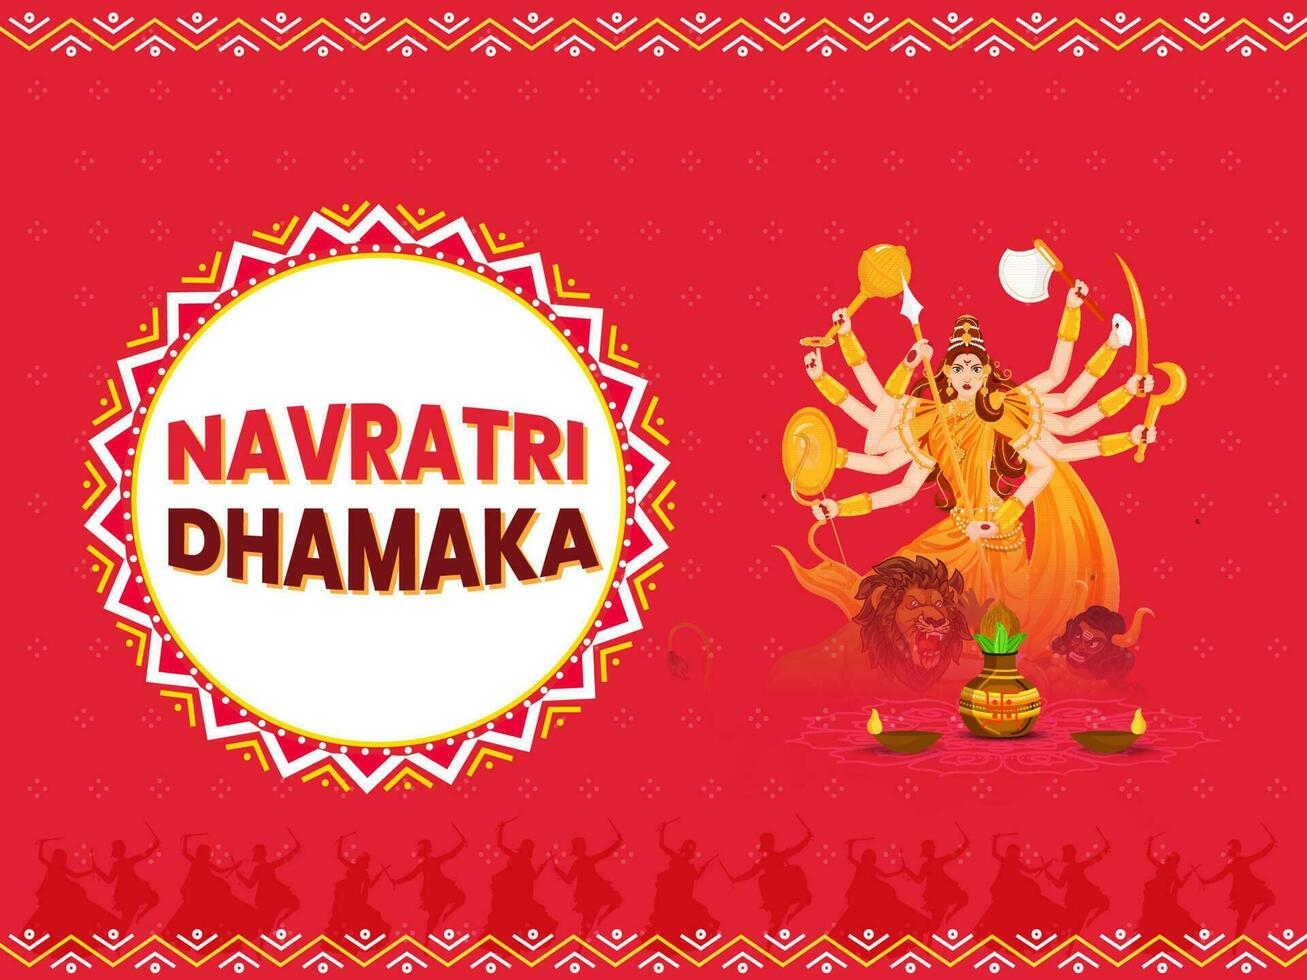 navratri Dhamaka Poster Design mit Göttin Durga maa Skulptur, zündete Öl Lampen und Anbetung Topf, rot Hintergrund. vektor